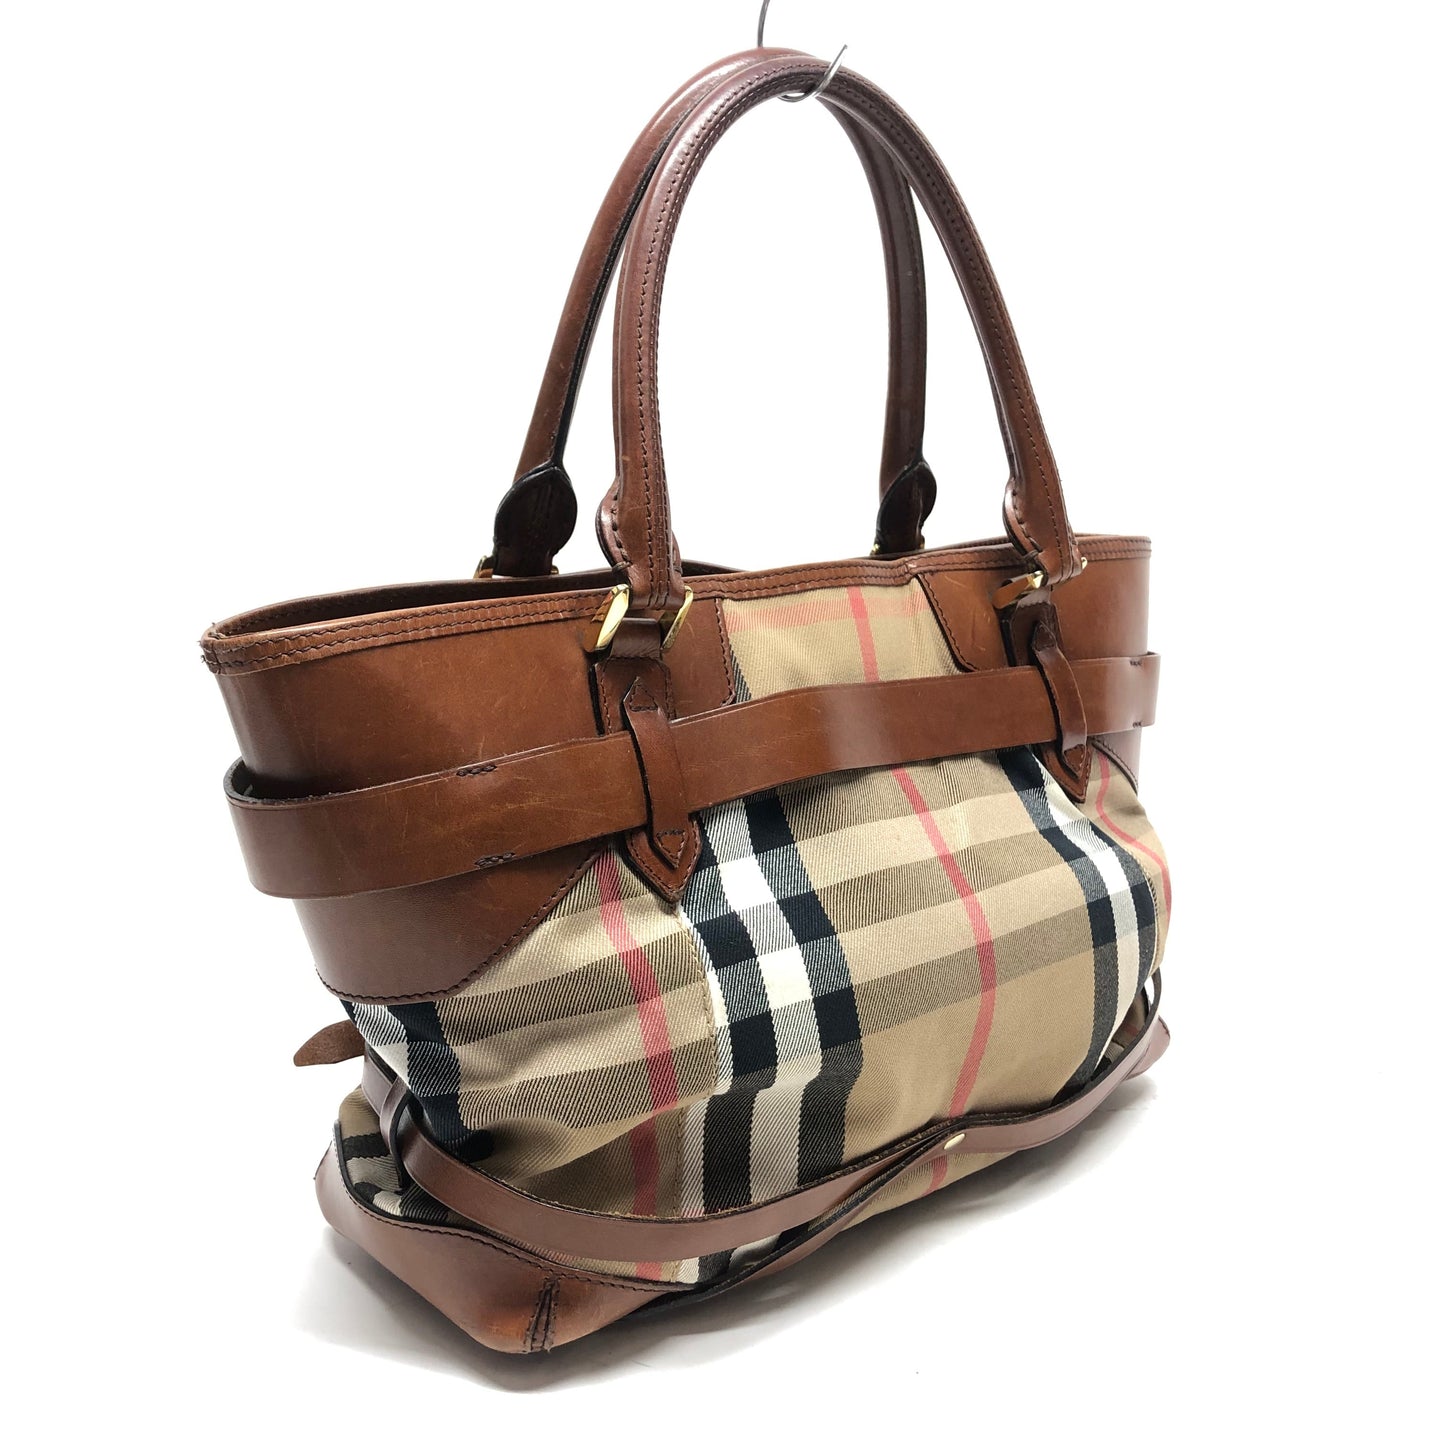 Handbag Luxury Designer Burberry, Size Large